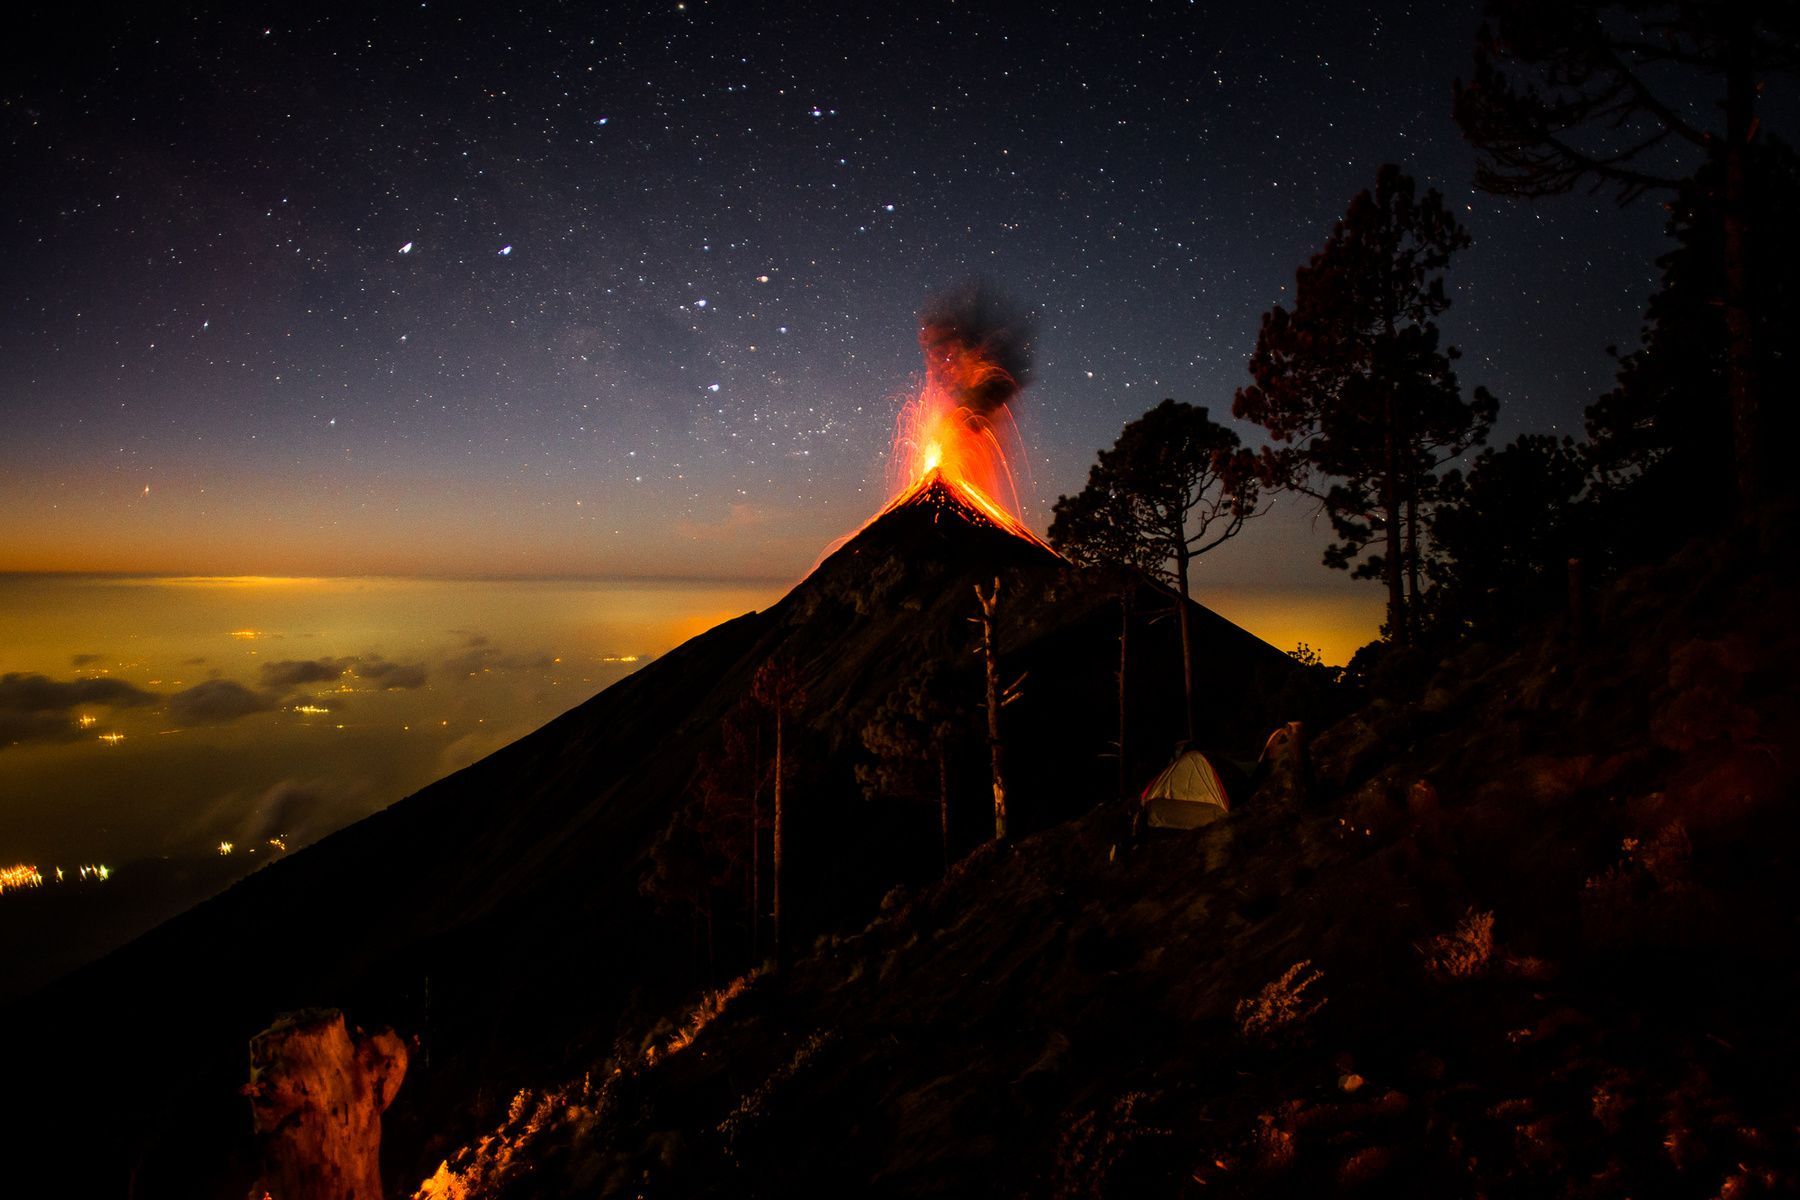 Volcán Acatenango – Ascenso nocturno